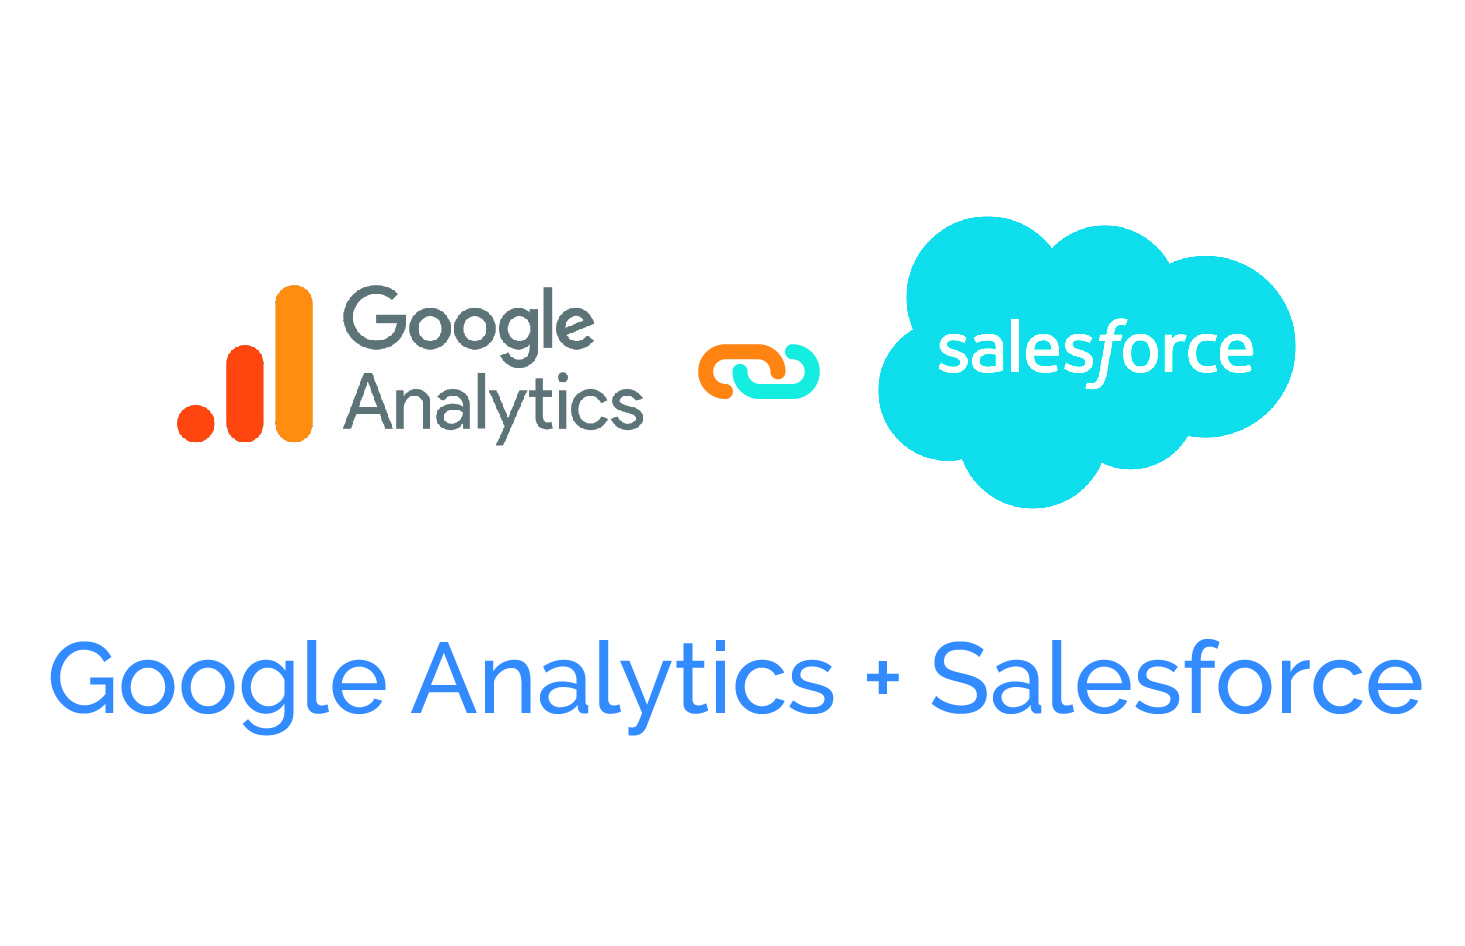 Google Analytics and Salesforce